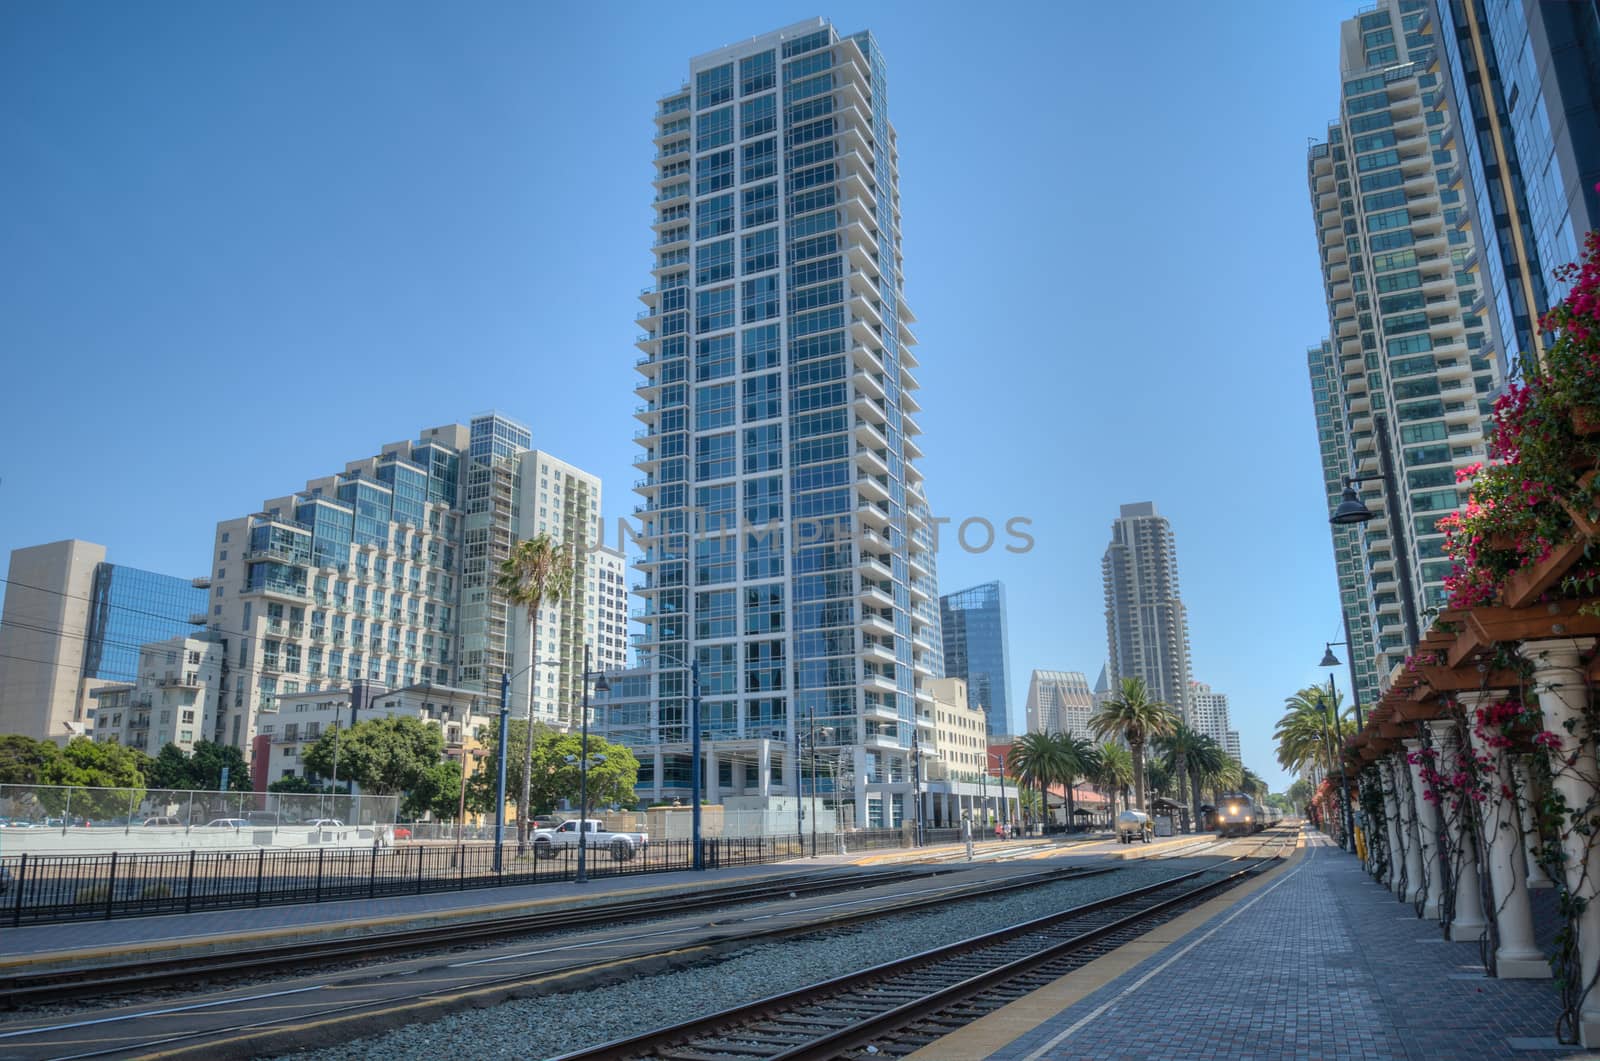 San Diego central station skyline buildings california, USA